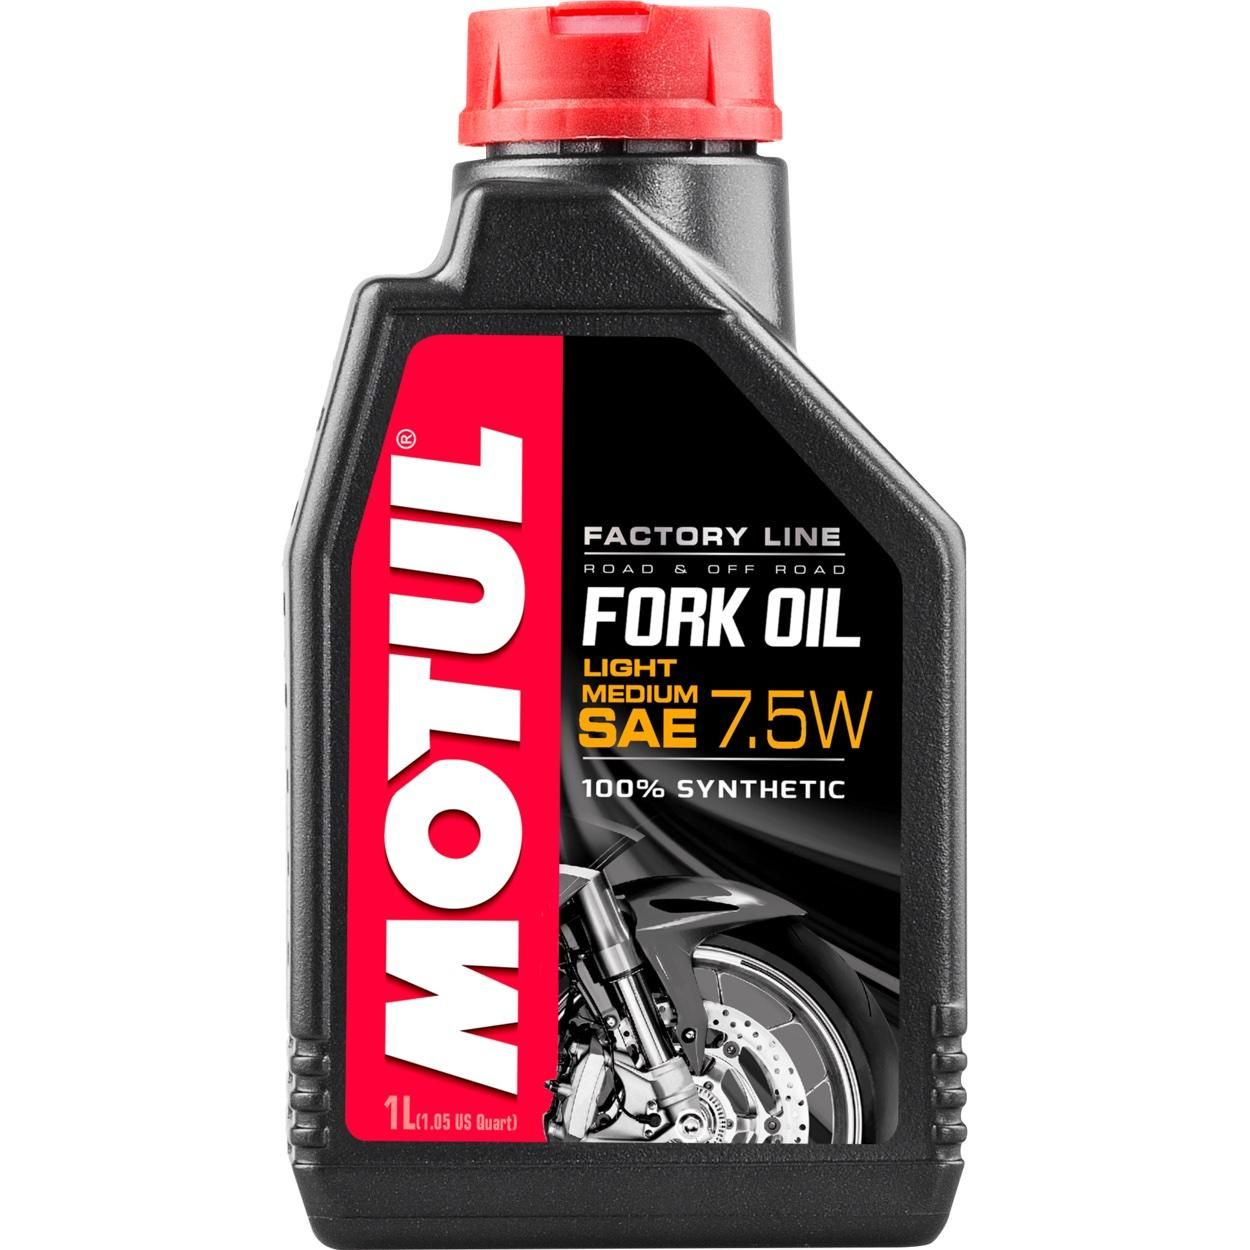 Вилочное масло Motul Fork Oil Light/Medium Factory Line 7,5W 1л (821701 / 105926)